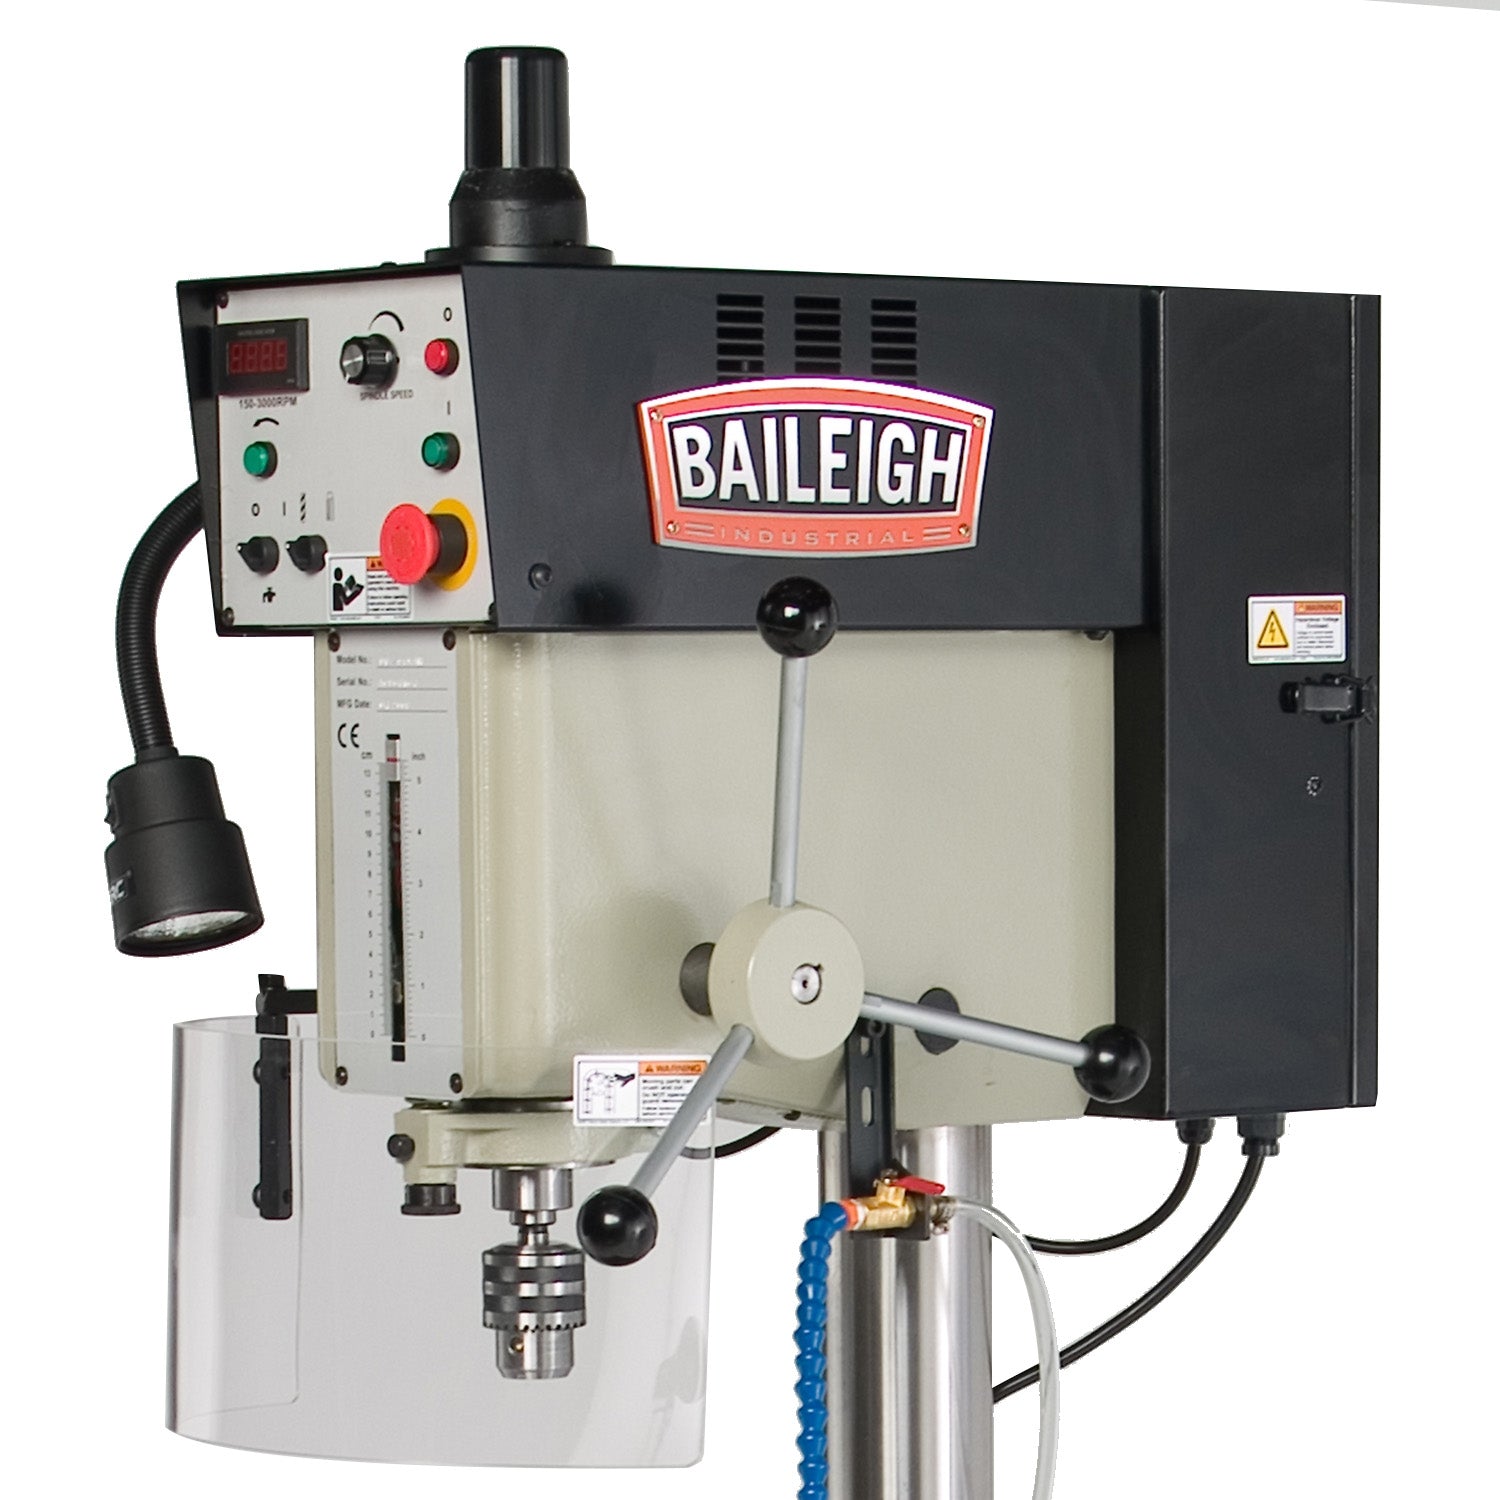 Baileigh DP-1000VS 220V 1 Phase Inverter Driven Drill PressManual Feed 1" Mild Steel Drilling Capacity